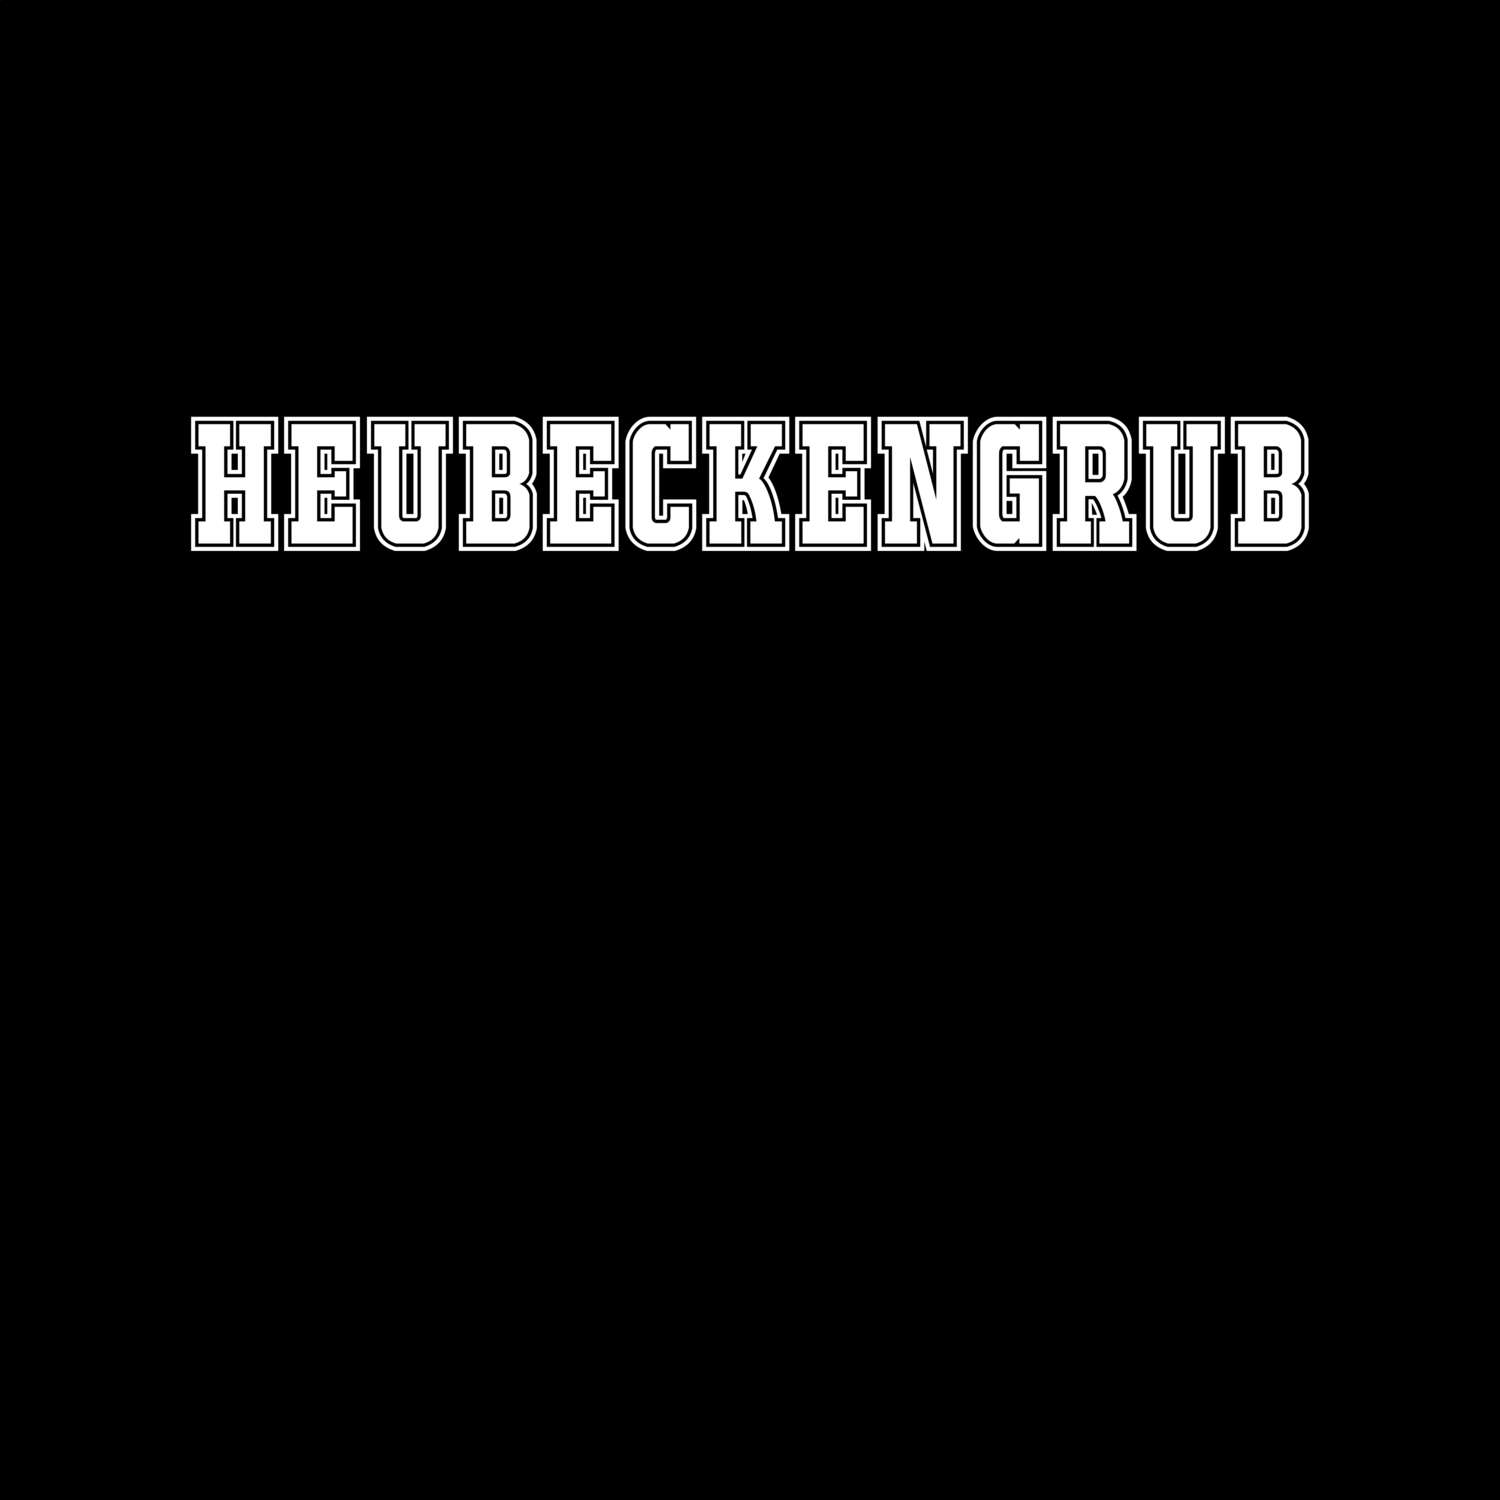 Heubeckengrub T-Shirt »Classic«